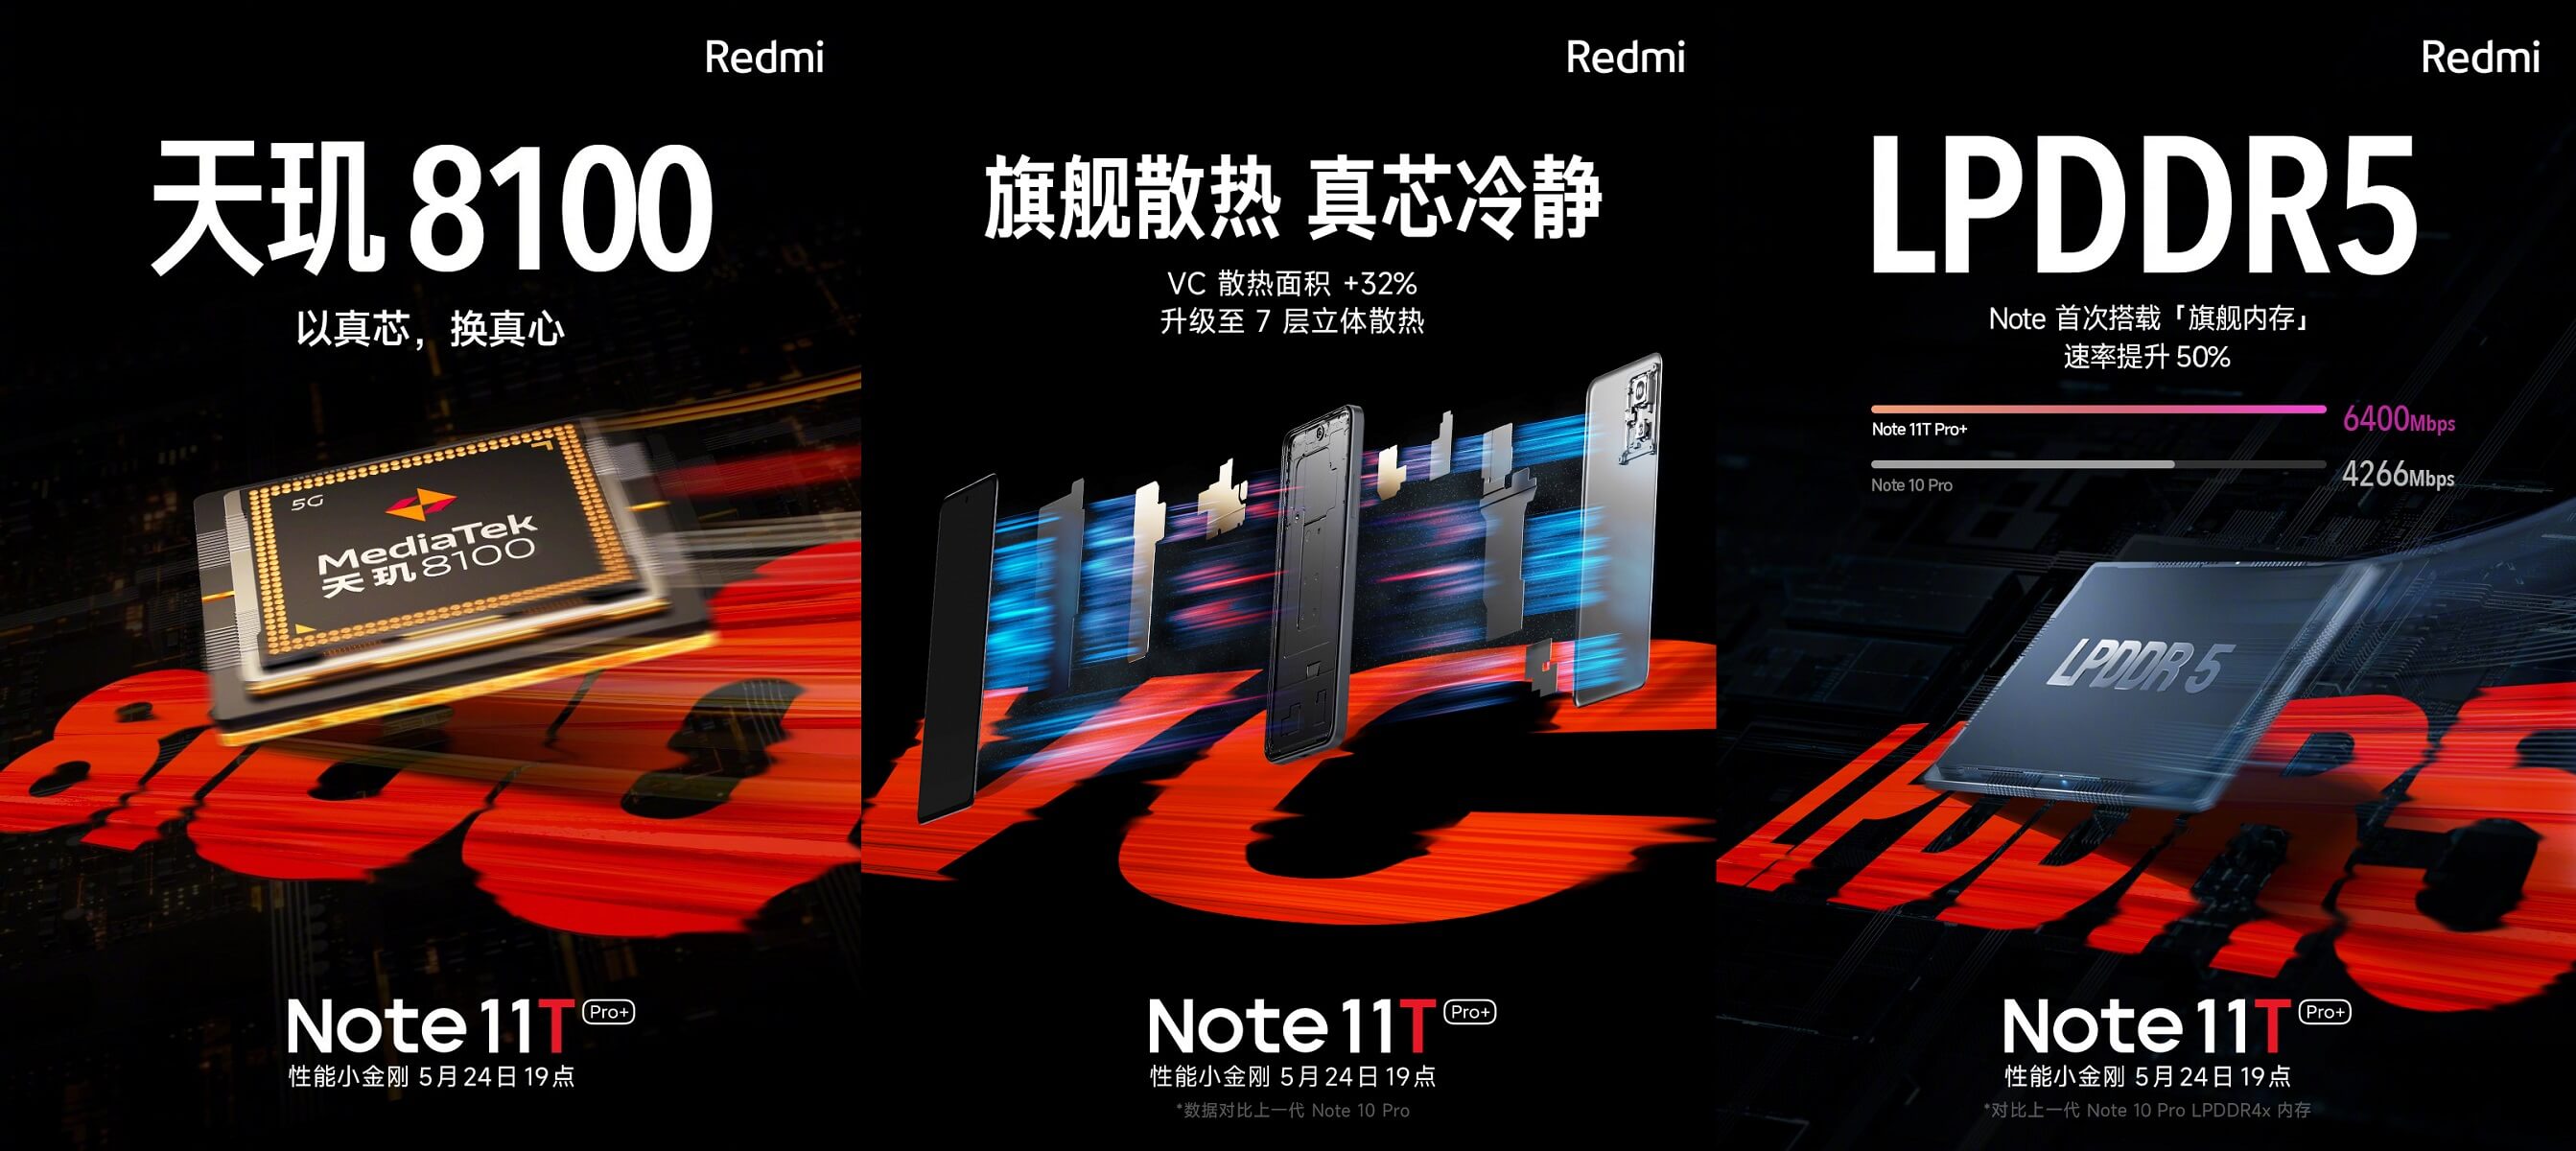 Redmi Note 11T Pro Plus 1 features